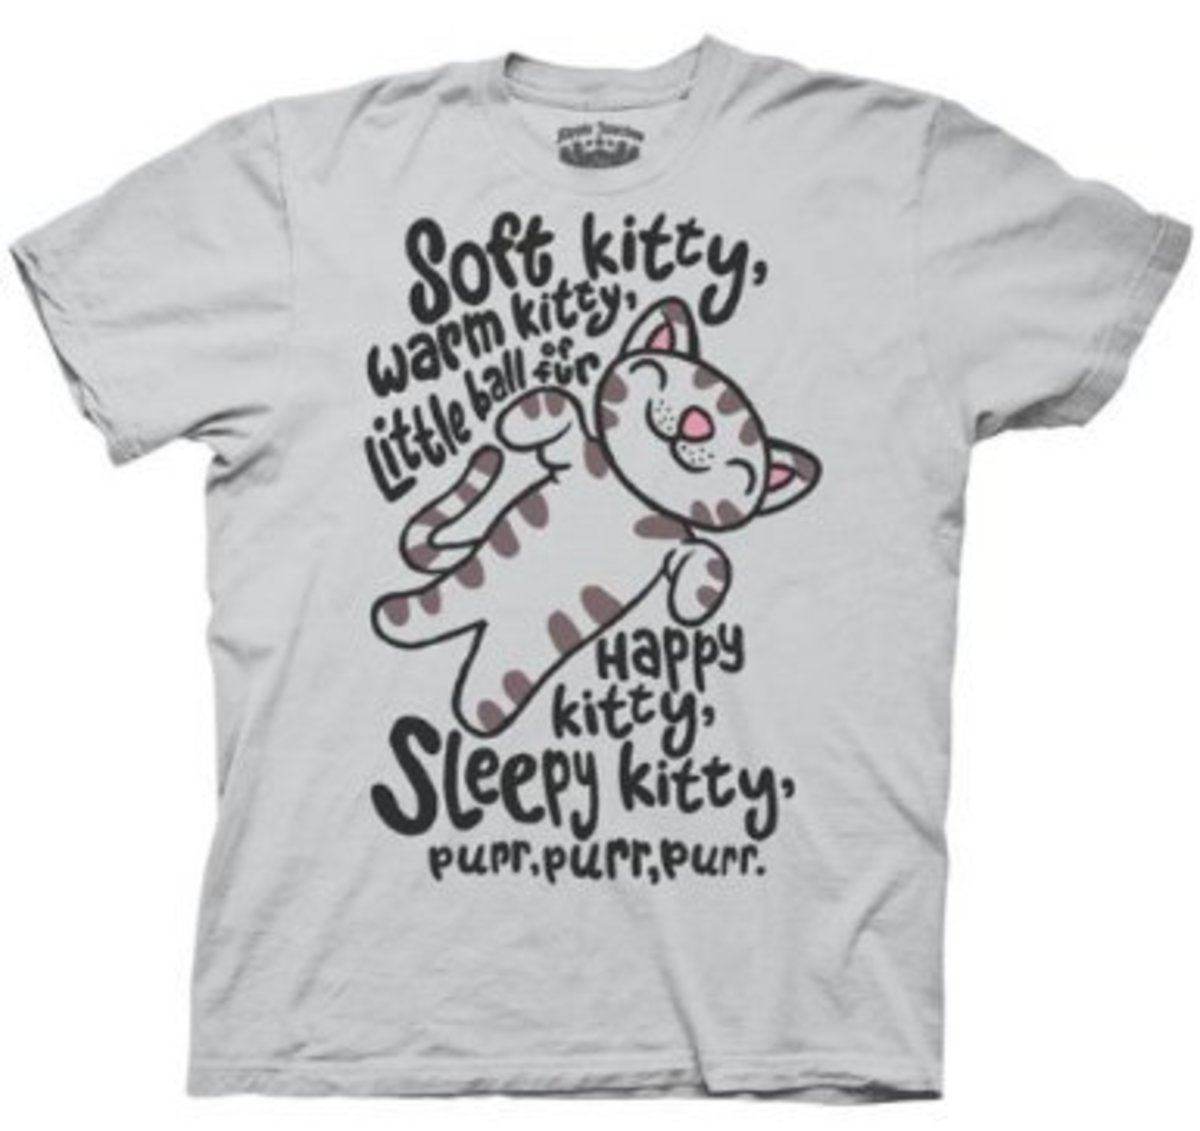 My favorite!  The "Soft Kitty" shirt